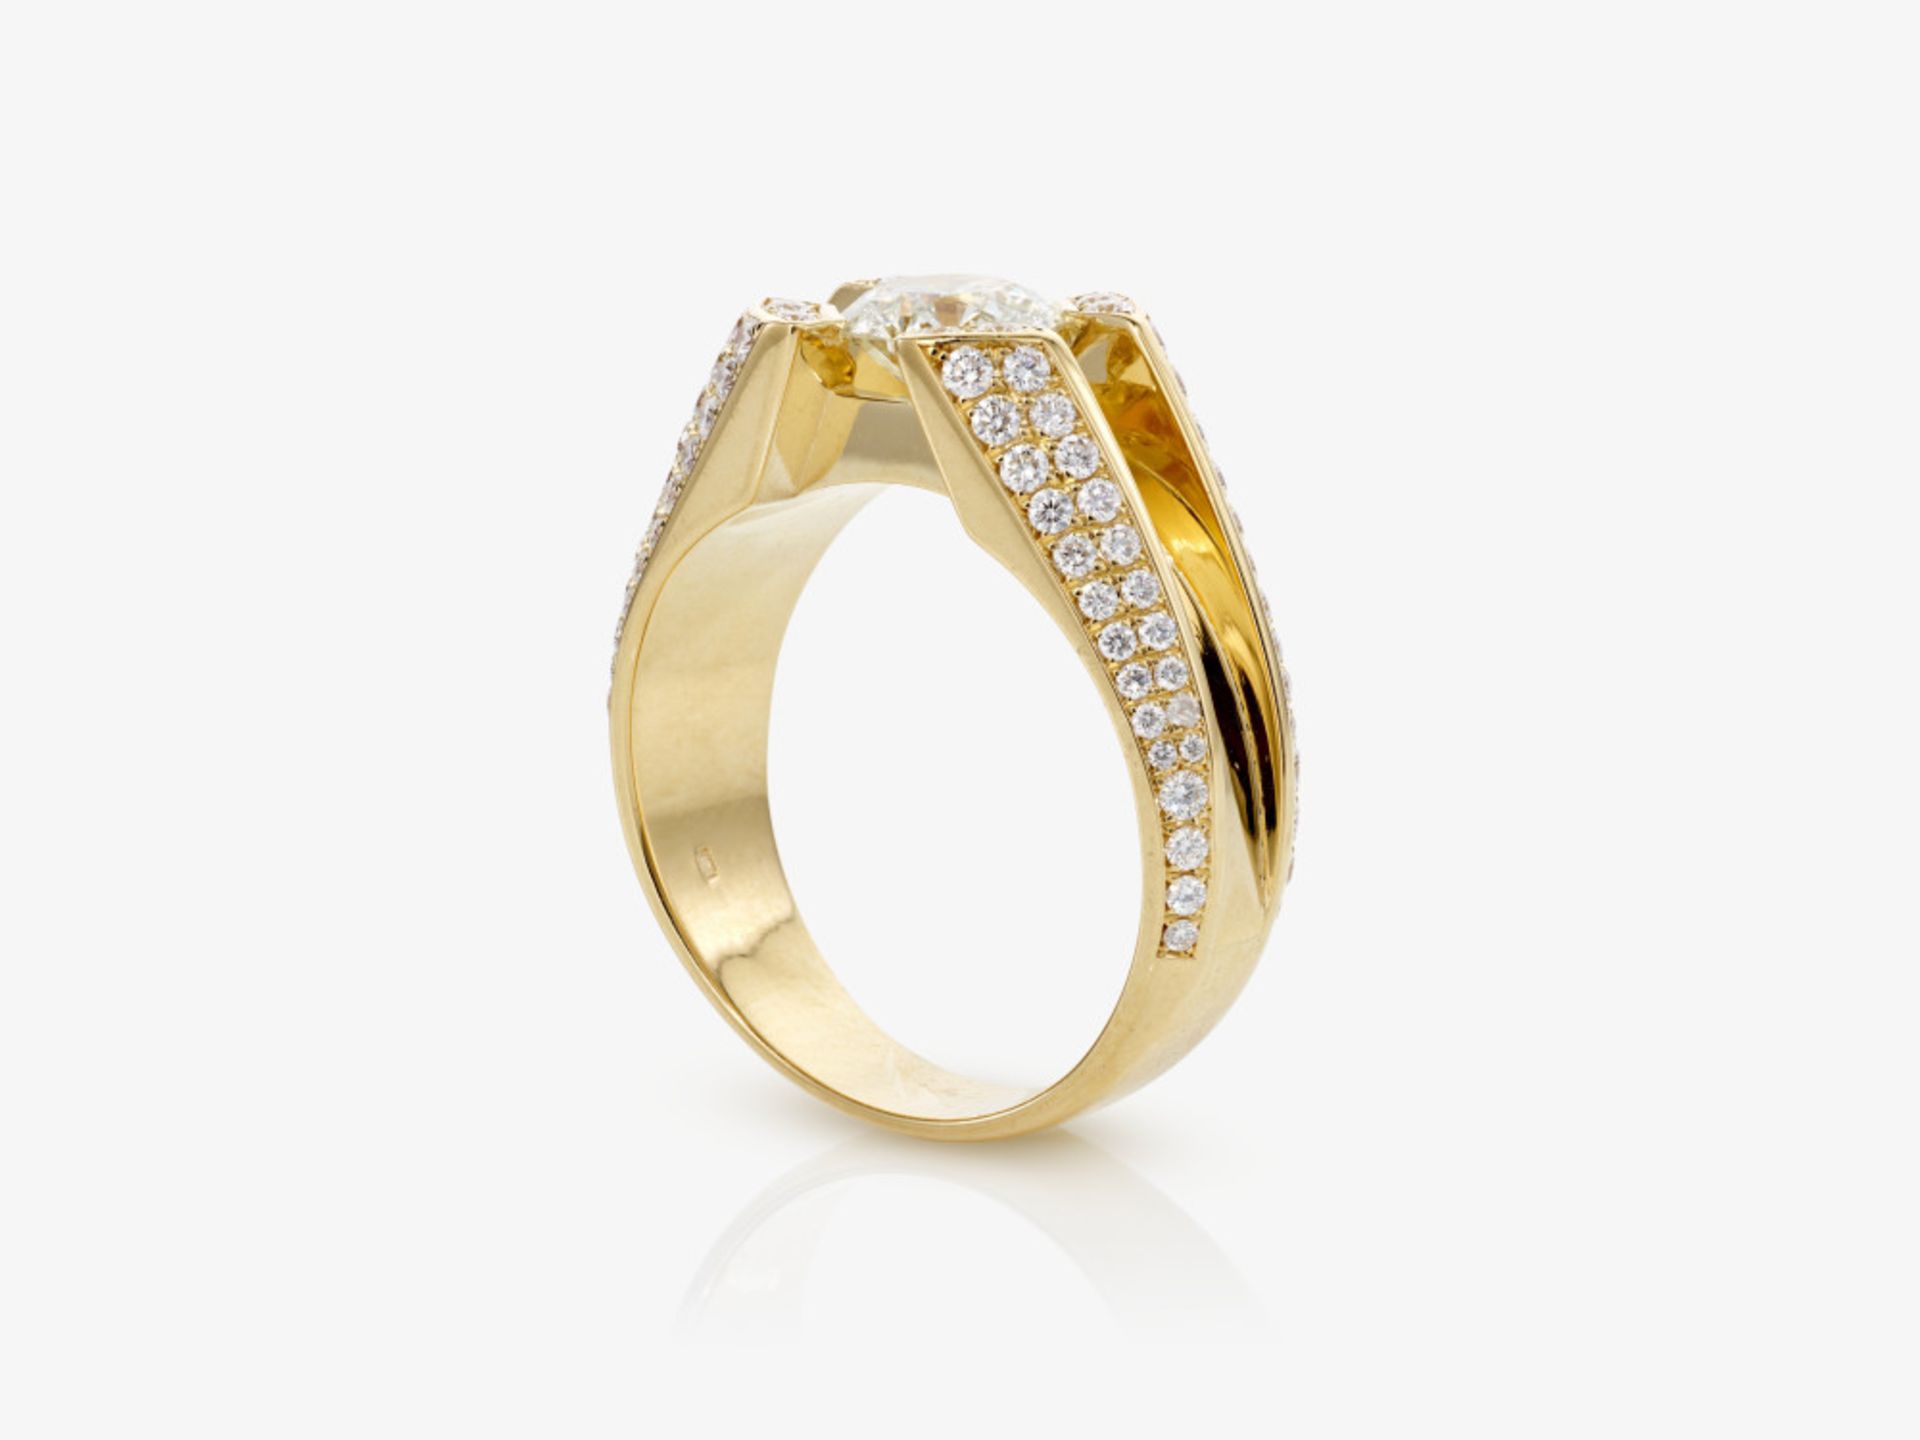 A gentlemens ring with brilliant-cut diamonds - Belgium, ANTWERP ATELIERS - Image 3 of 3